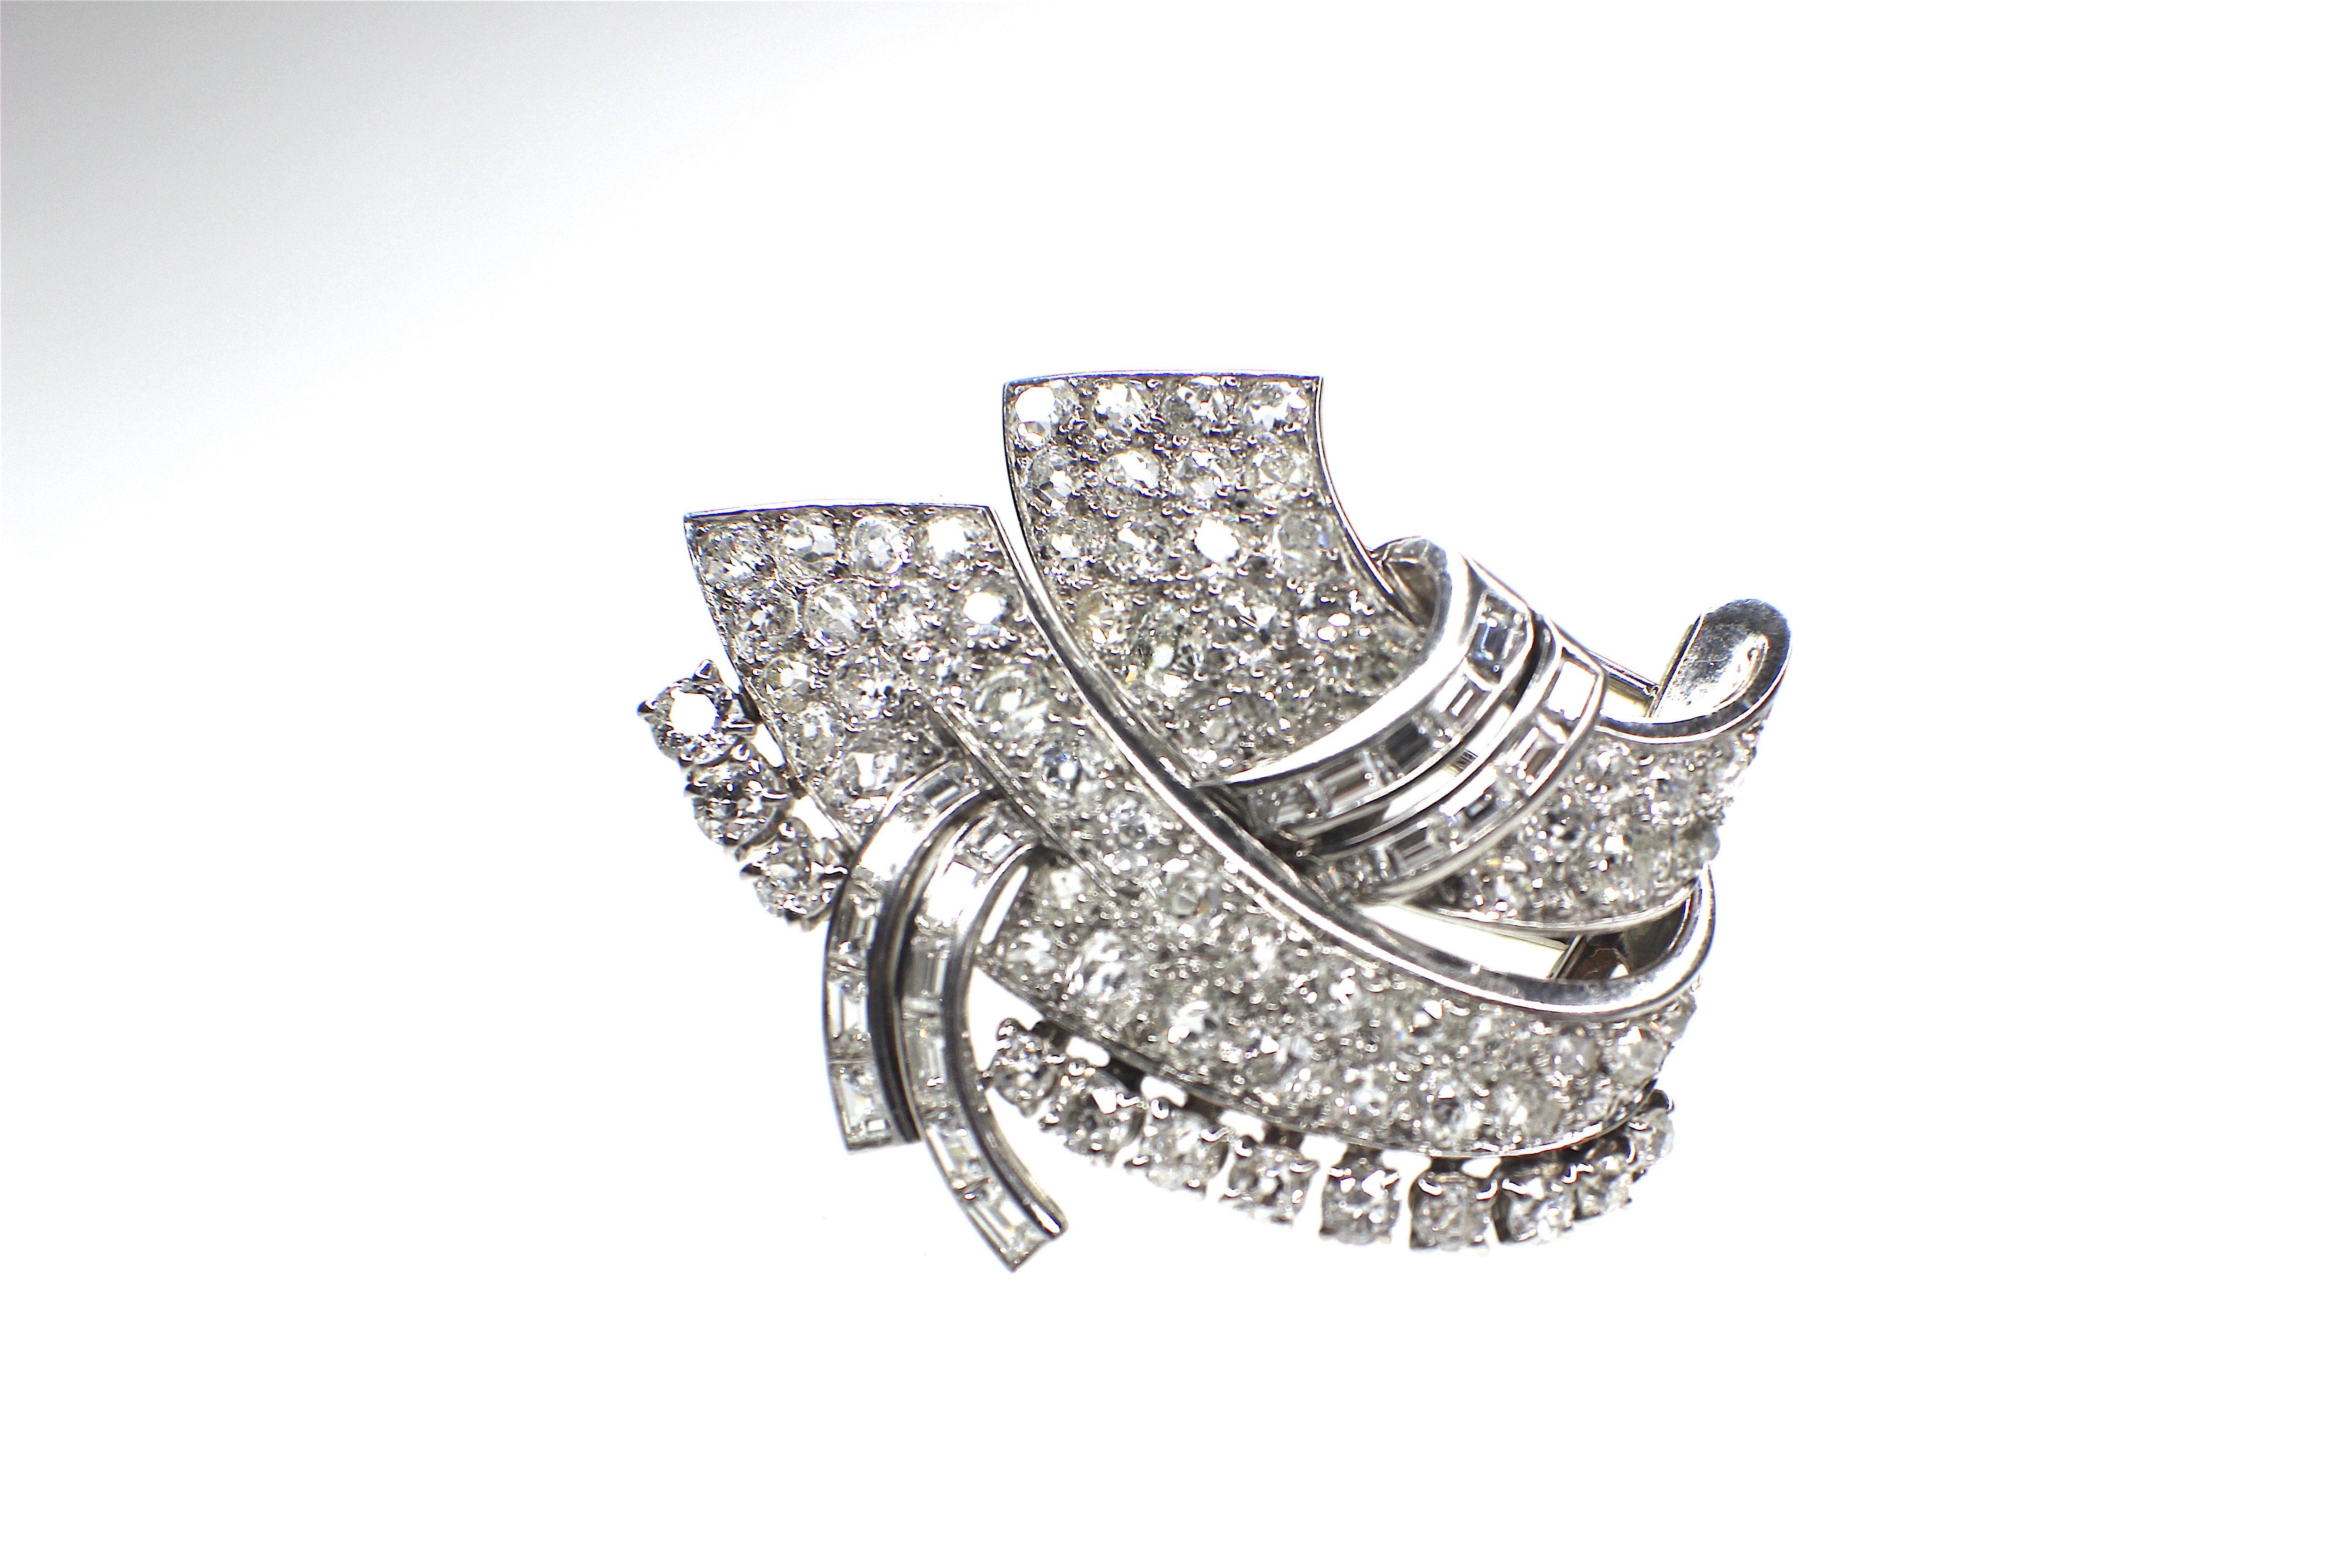 Retro Gemolithos Van Cleef & Arpels Diamond Double Clip Brooch, 1940s For Sale